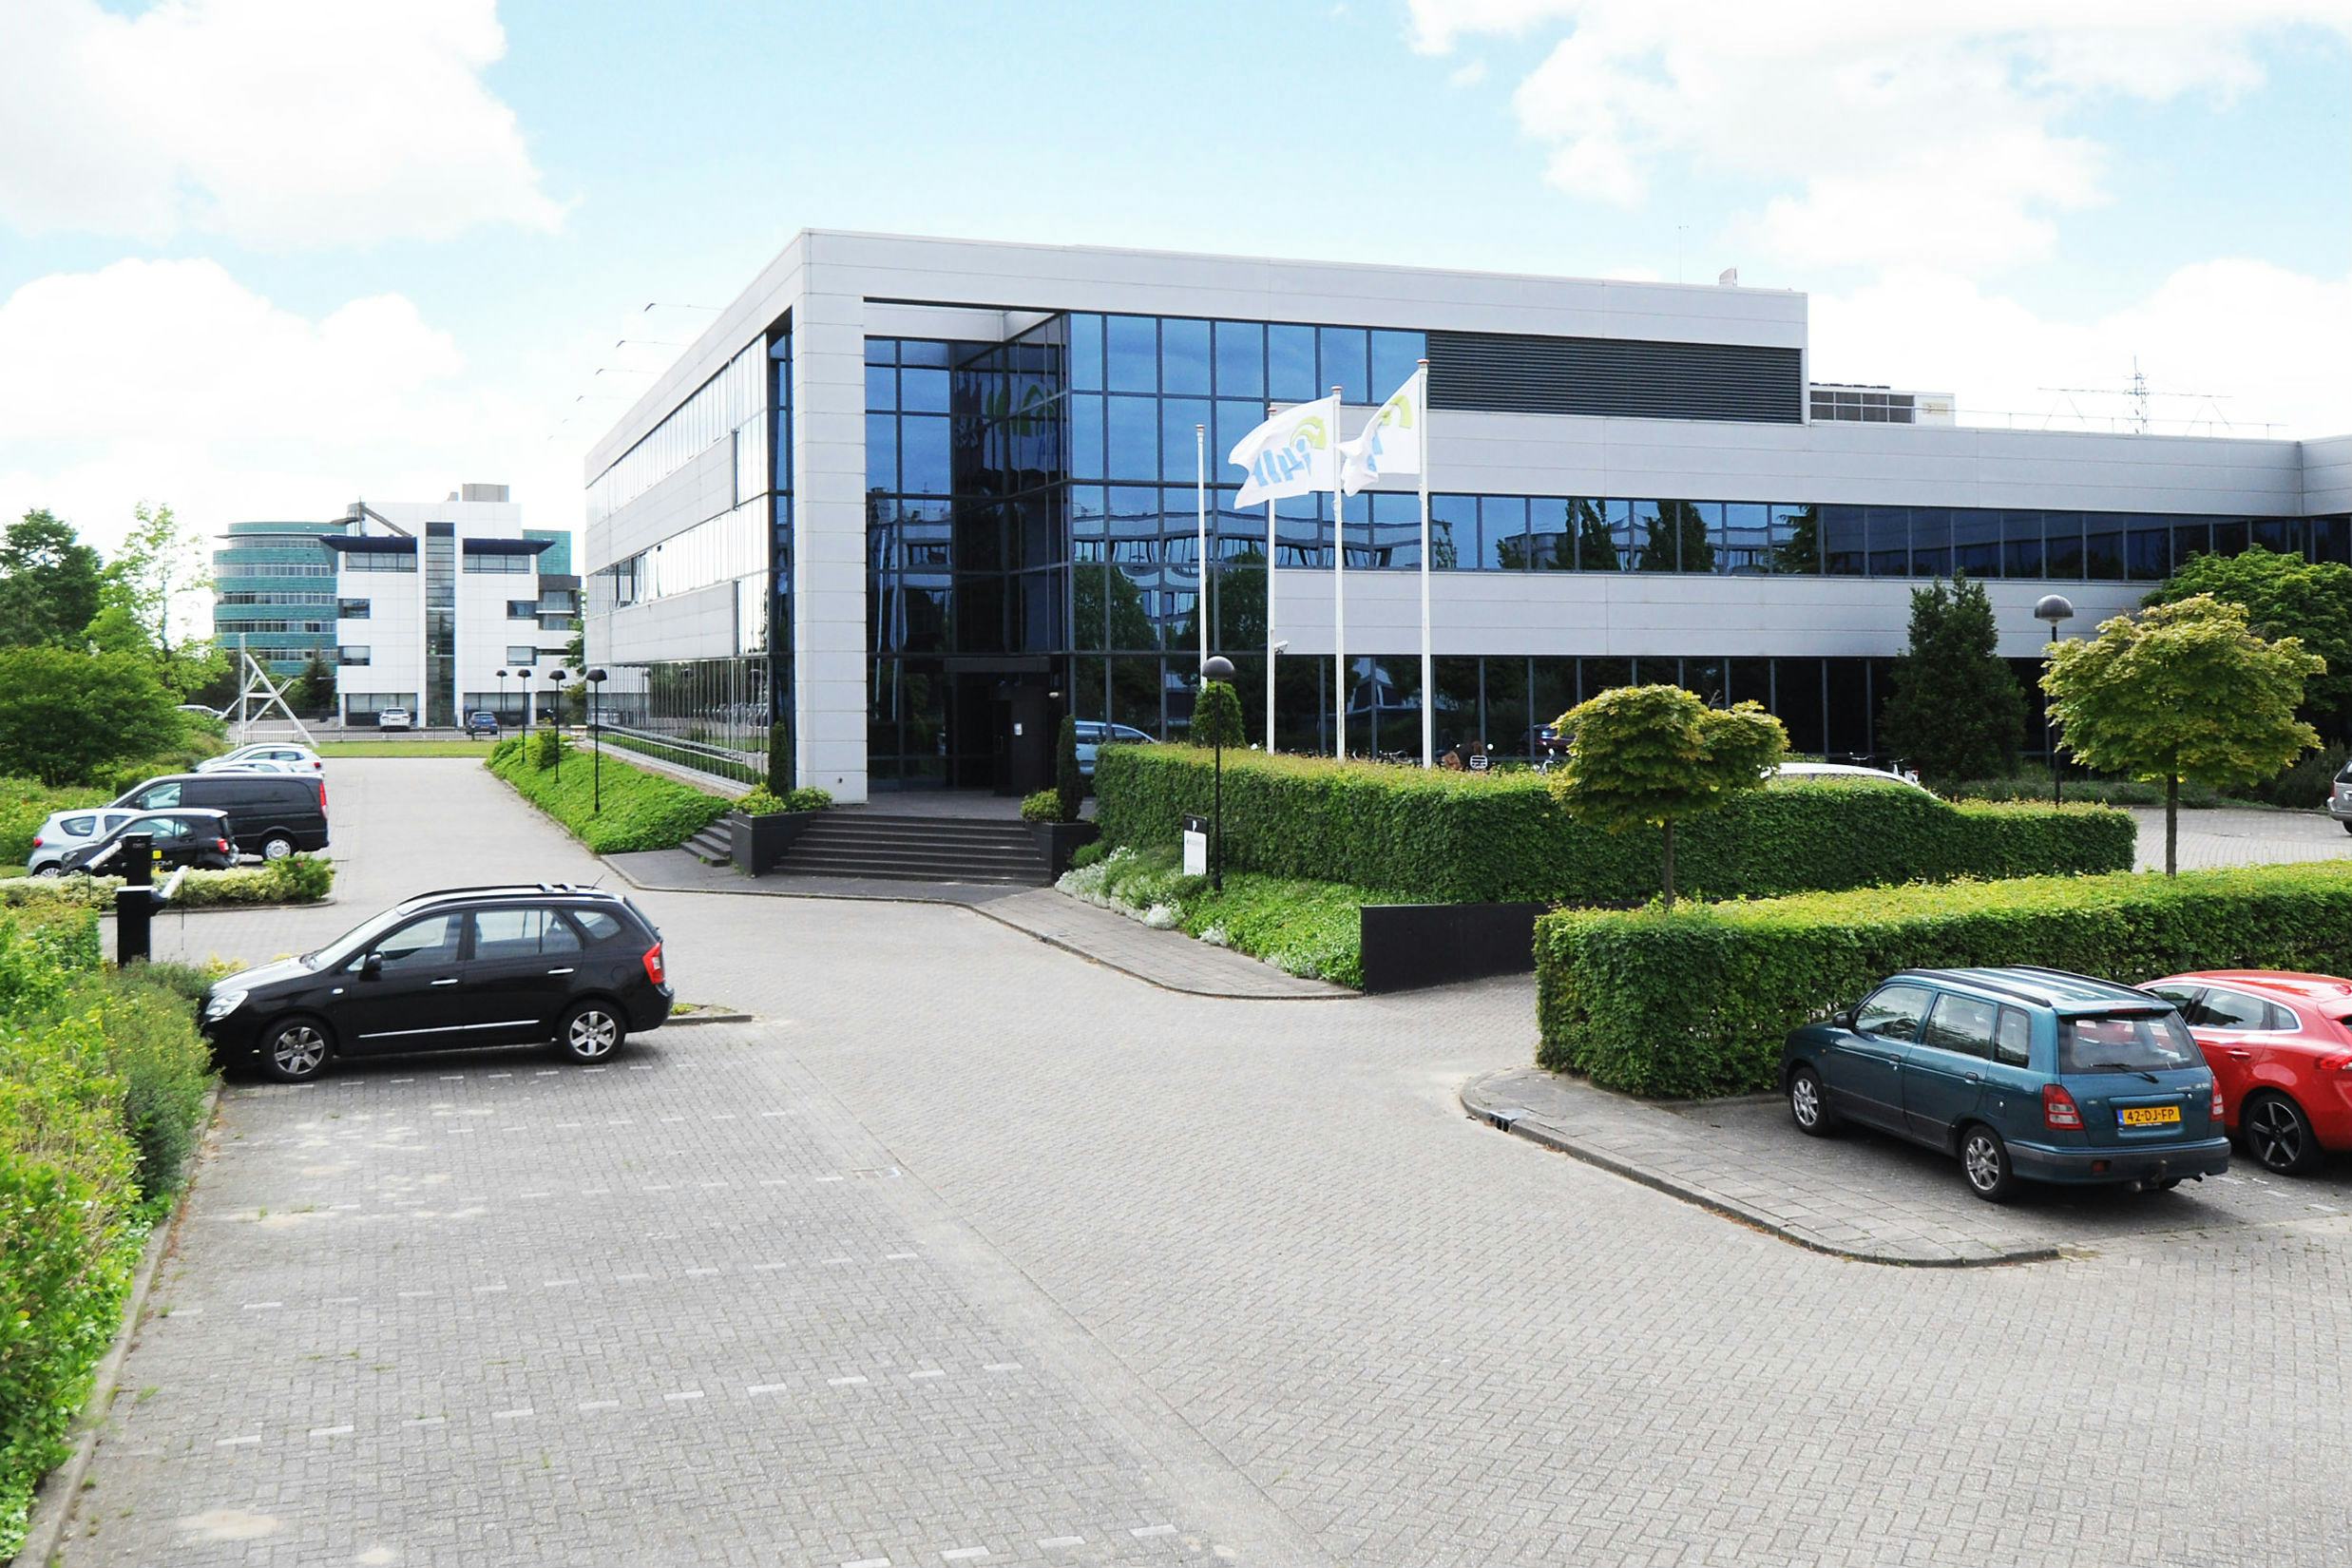 Nedstede verhuurt 822 m² kantoorruimte in Almere